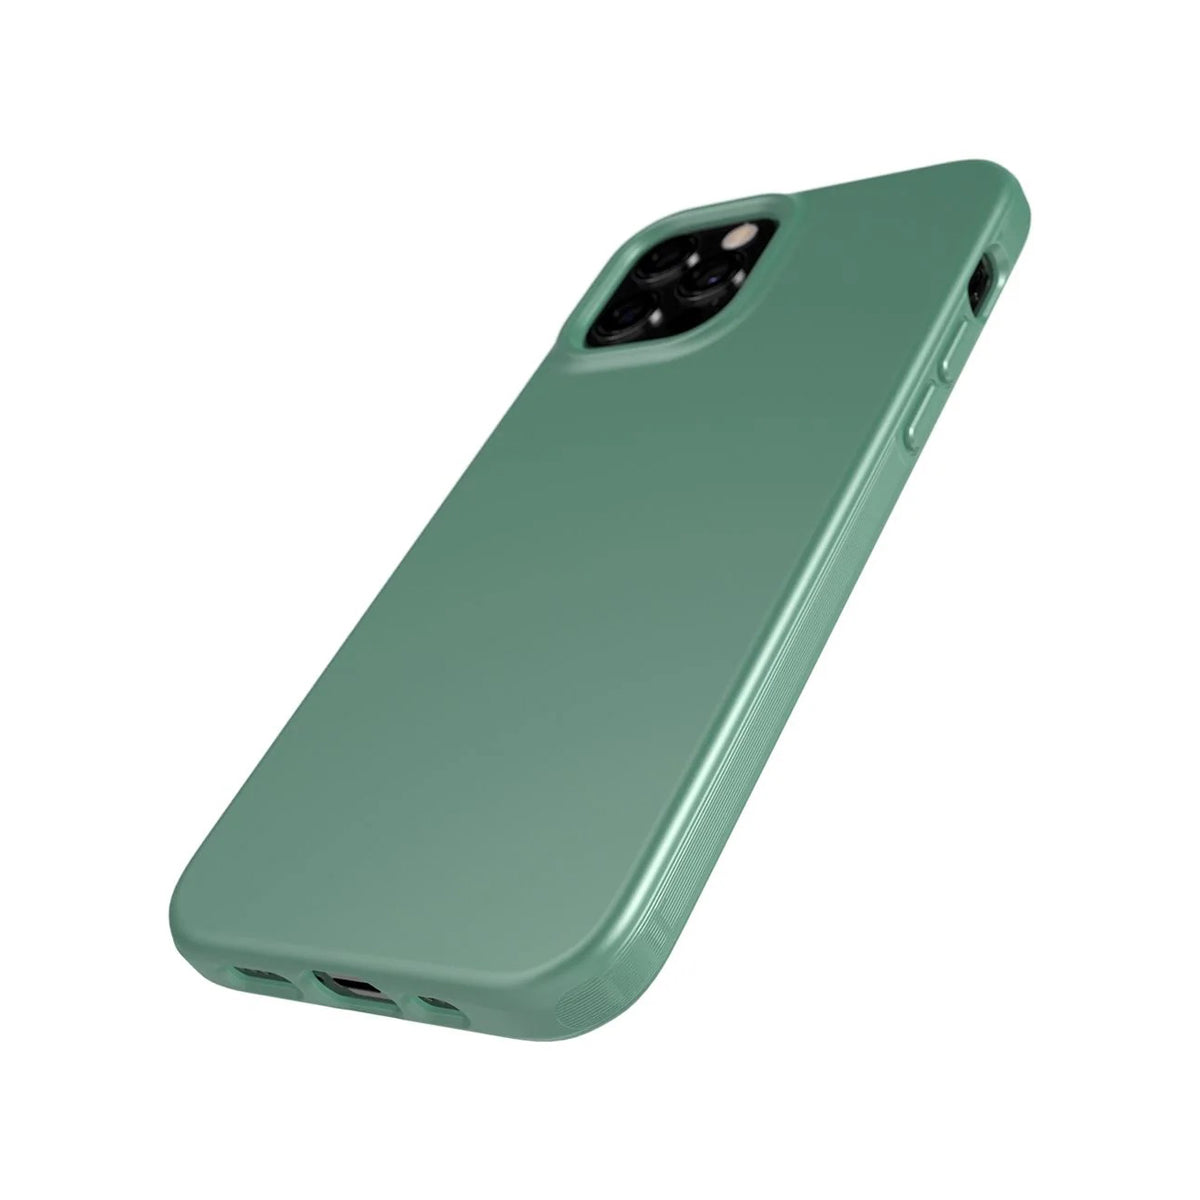 Tech21 Evo Slim Phone Case for Apple iPhone 12/12 Pro - Midnight Green.